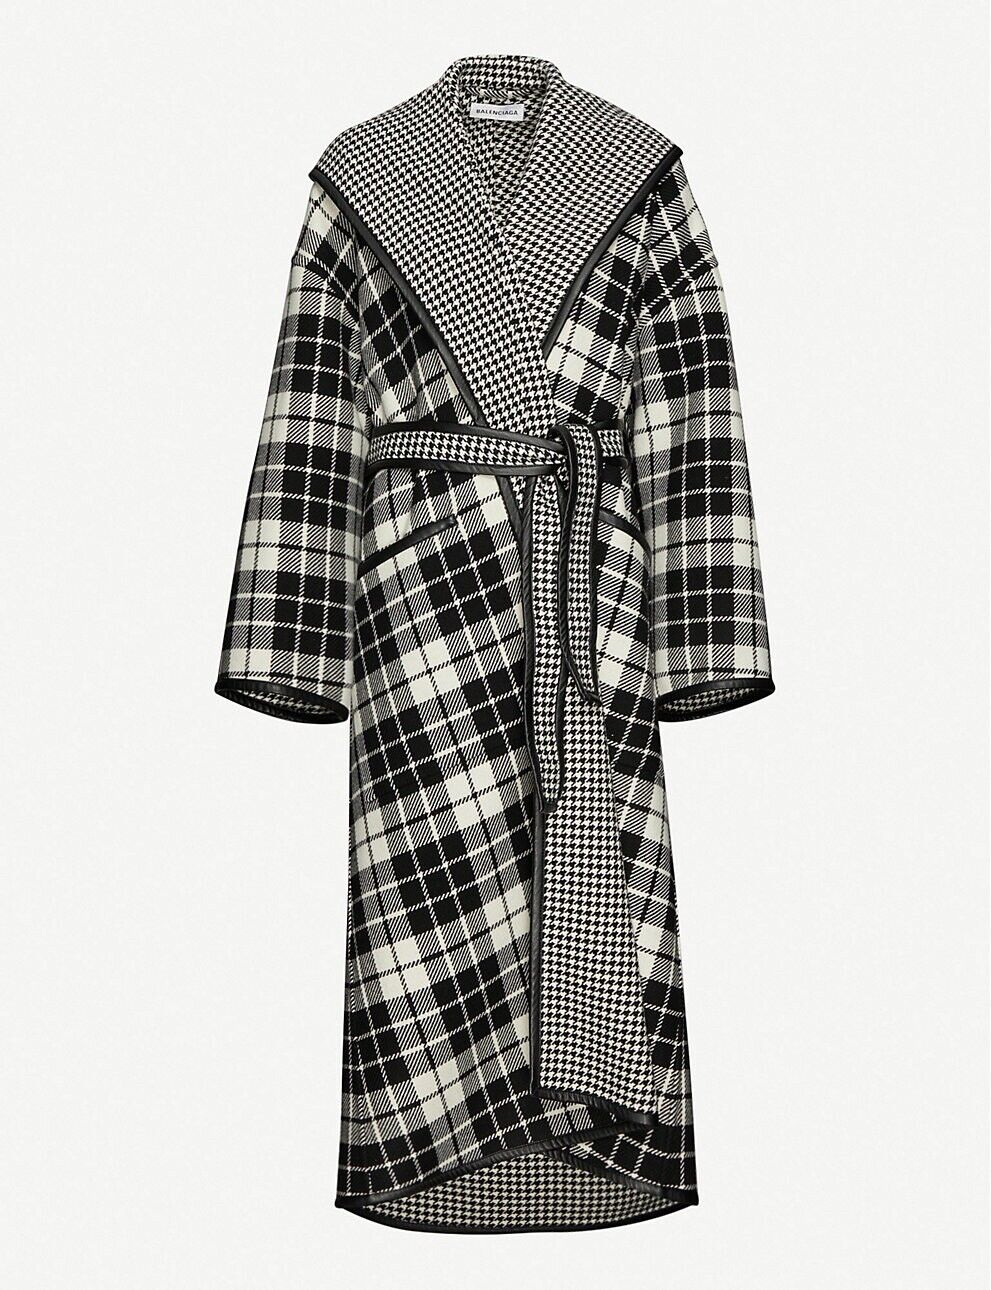 balenciaga tartan wool and cashmere hooded coat jacket size 36 ss2020 $3680